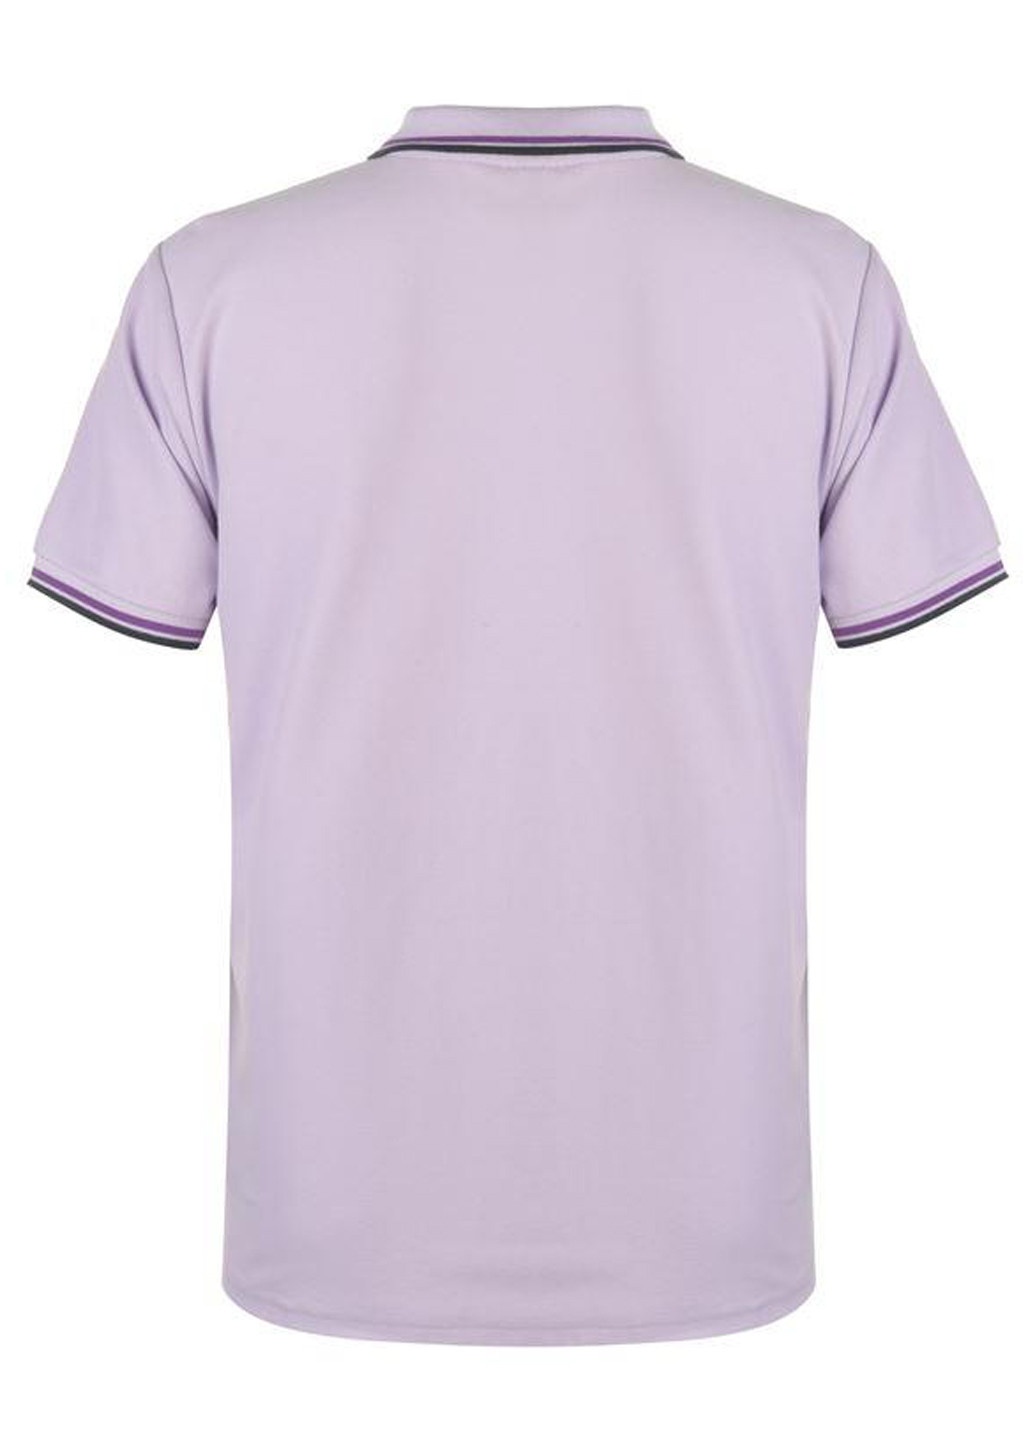 Сиреневая футболка-поло для мужчин Slazenger с логотипом